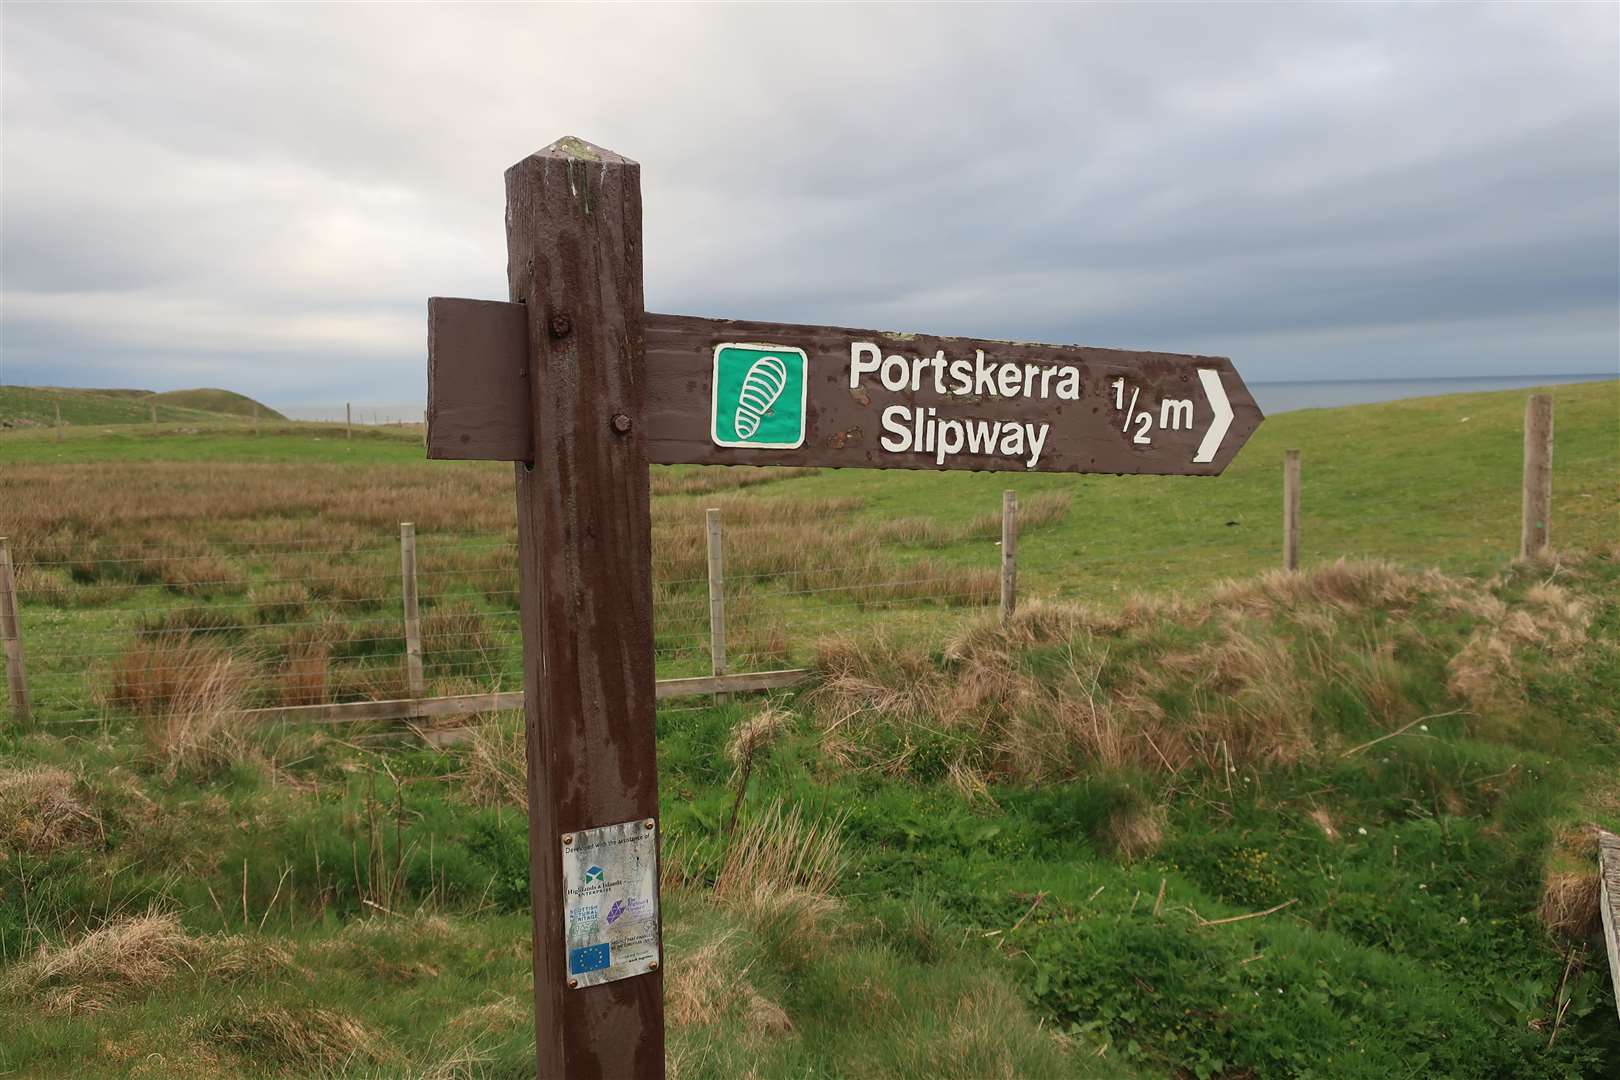 Sign to Portskerra slipway along the coast.